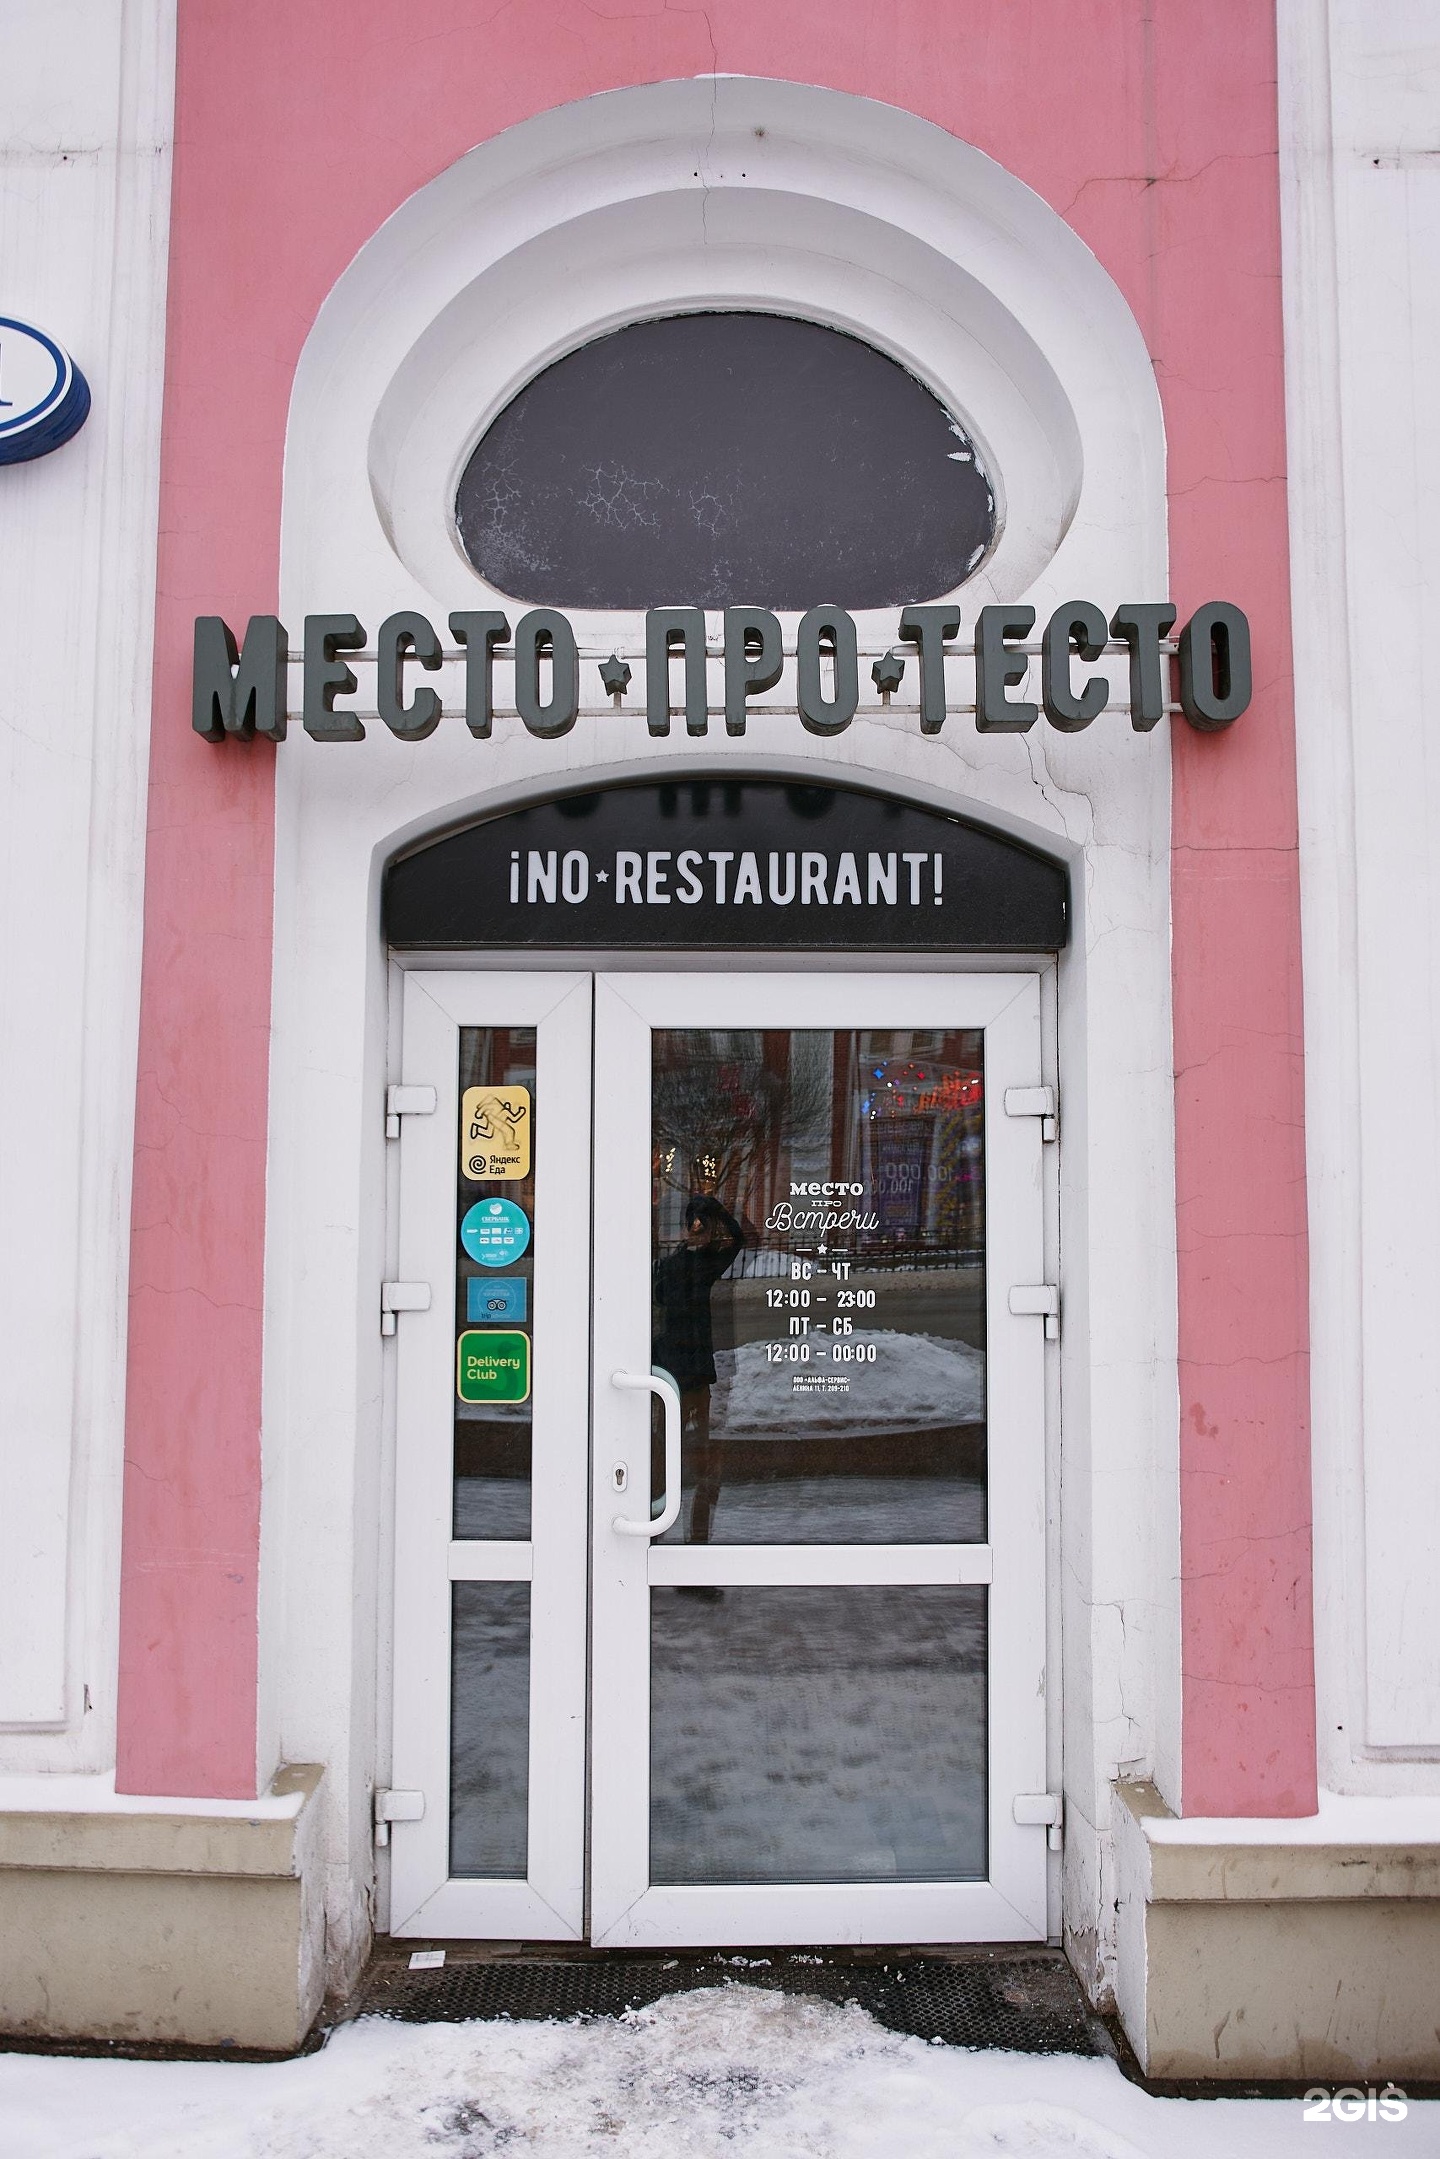 Место про тесто Краснодар. Ленина 11 Омск. То самое тесто ресторан Самара. Место про тесто Нальчик.